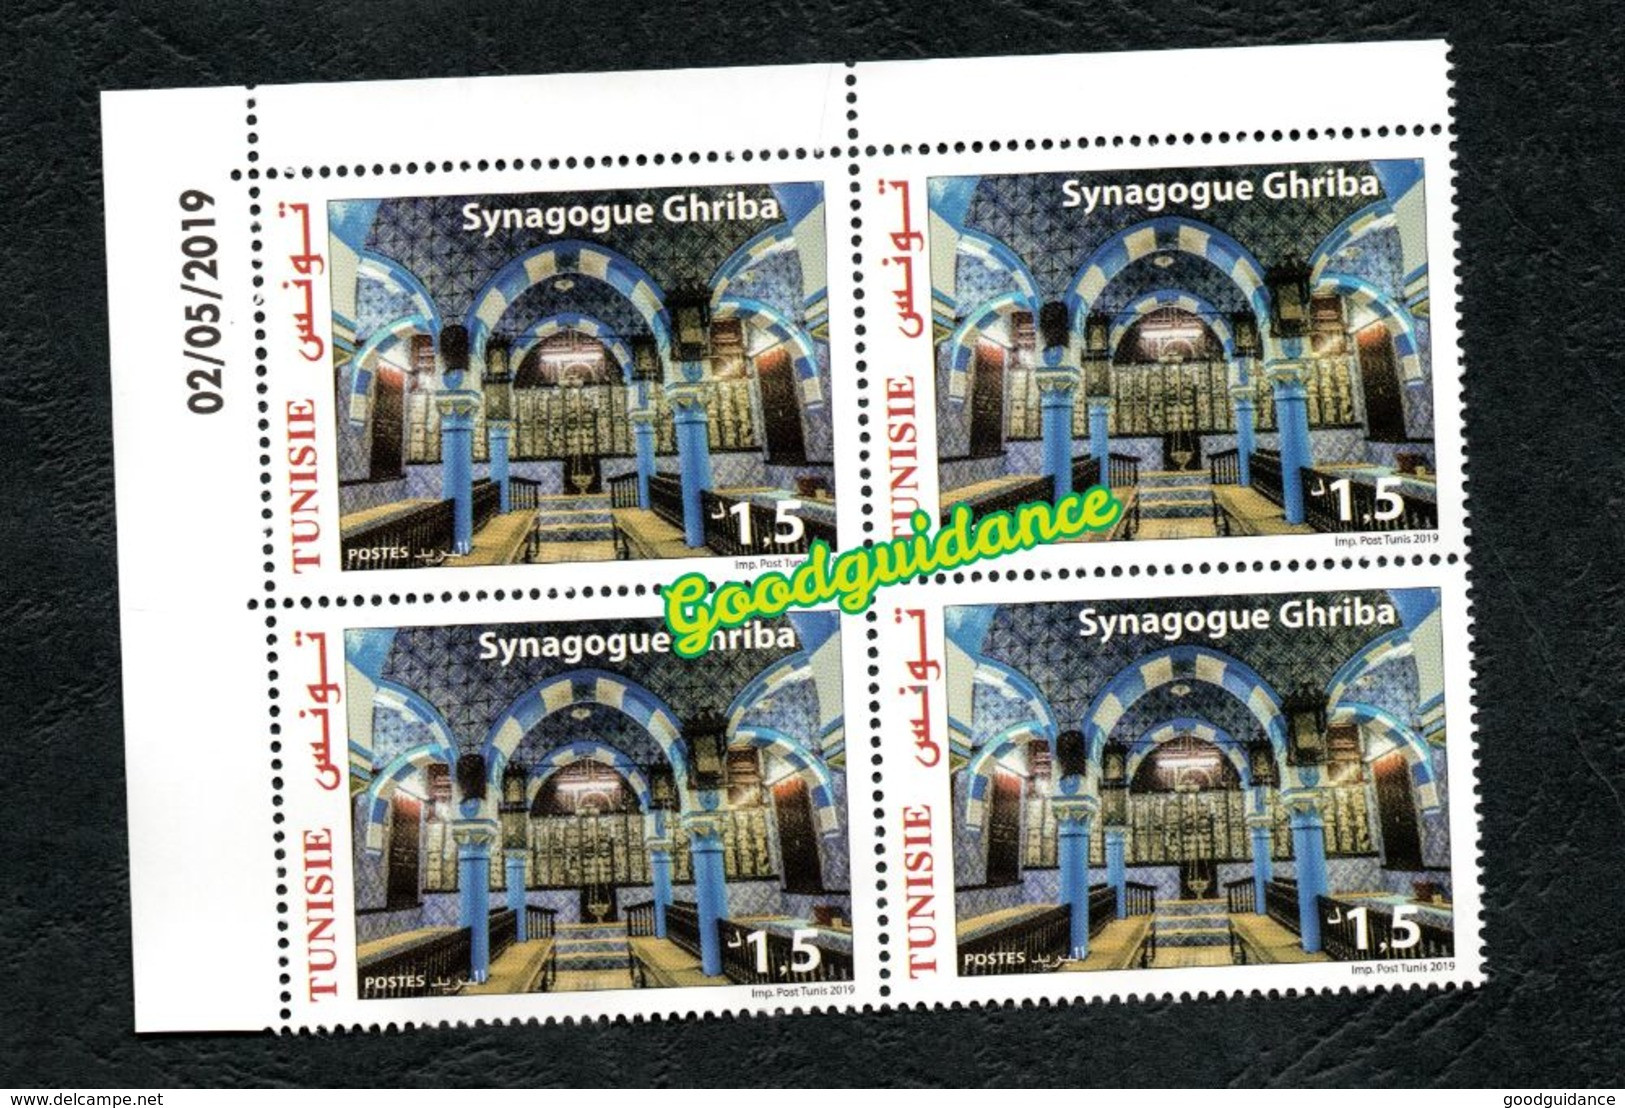 2019- Tunisie - La Synagogue De La Ghriba De Djerba- Bloc De 4 Timbres - Emission Complete Set 1v.MNH** Coin Daté - Judaika, Judentum